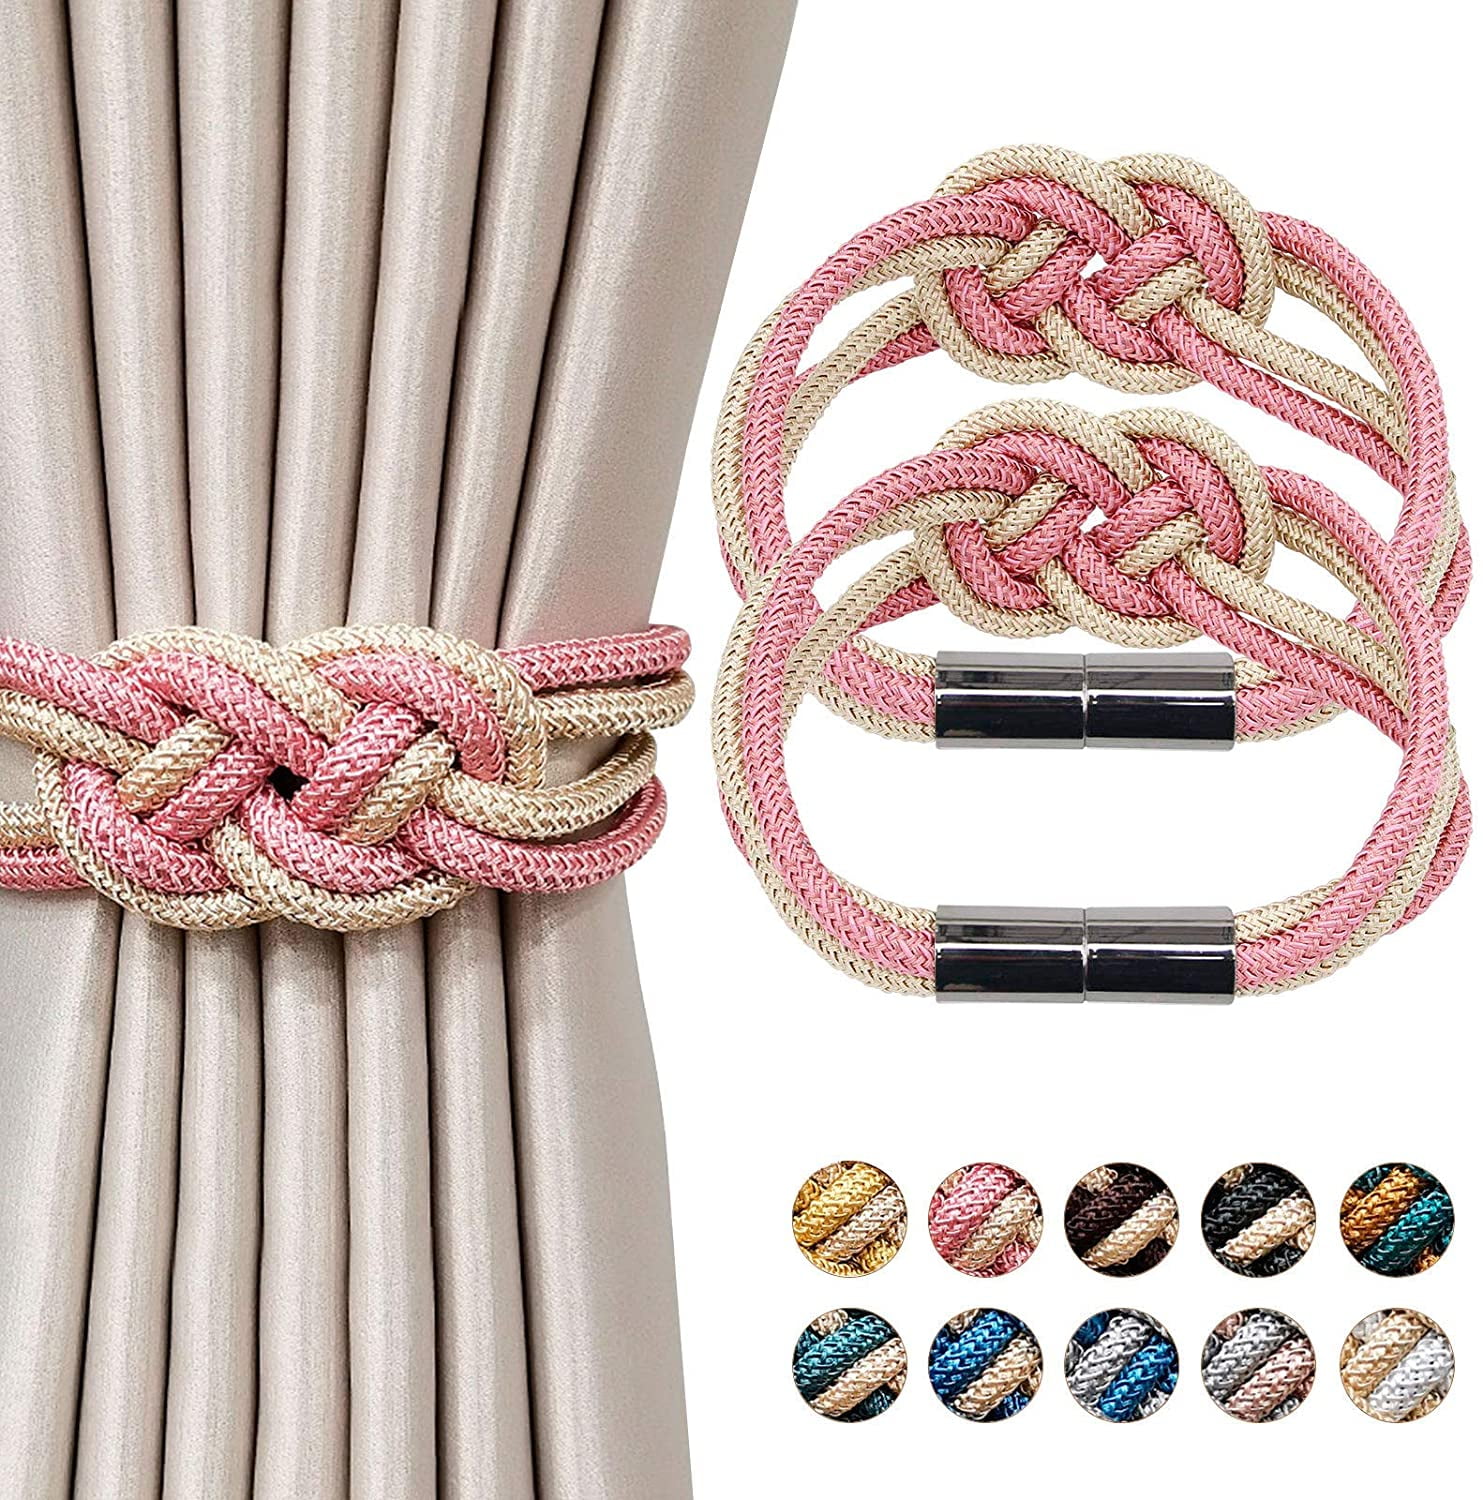 2 Slim Natural cotton rope curtain tie backs fabric cord ties 1.5 cable tiebacks 